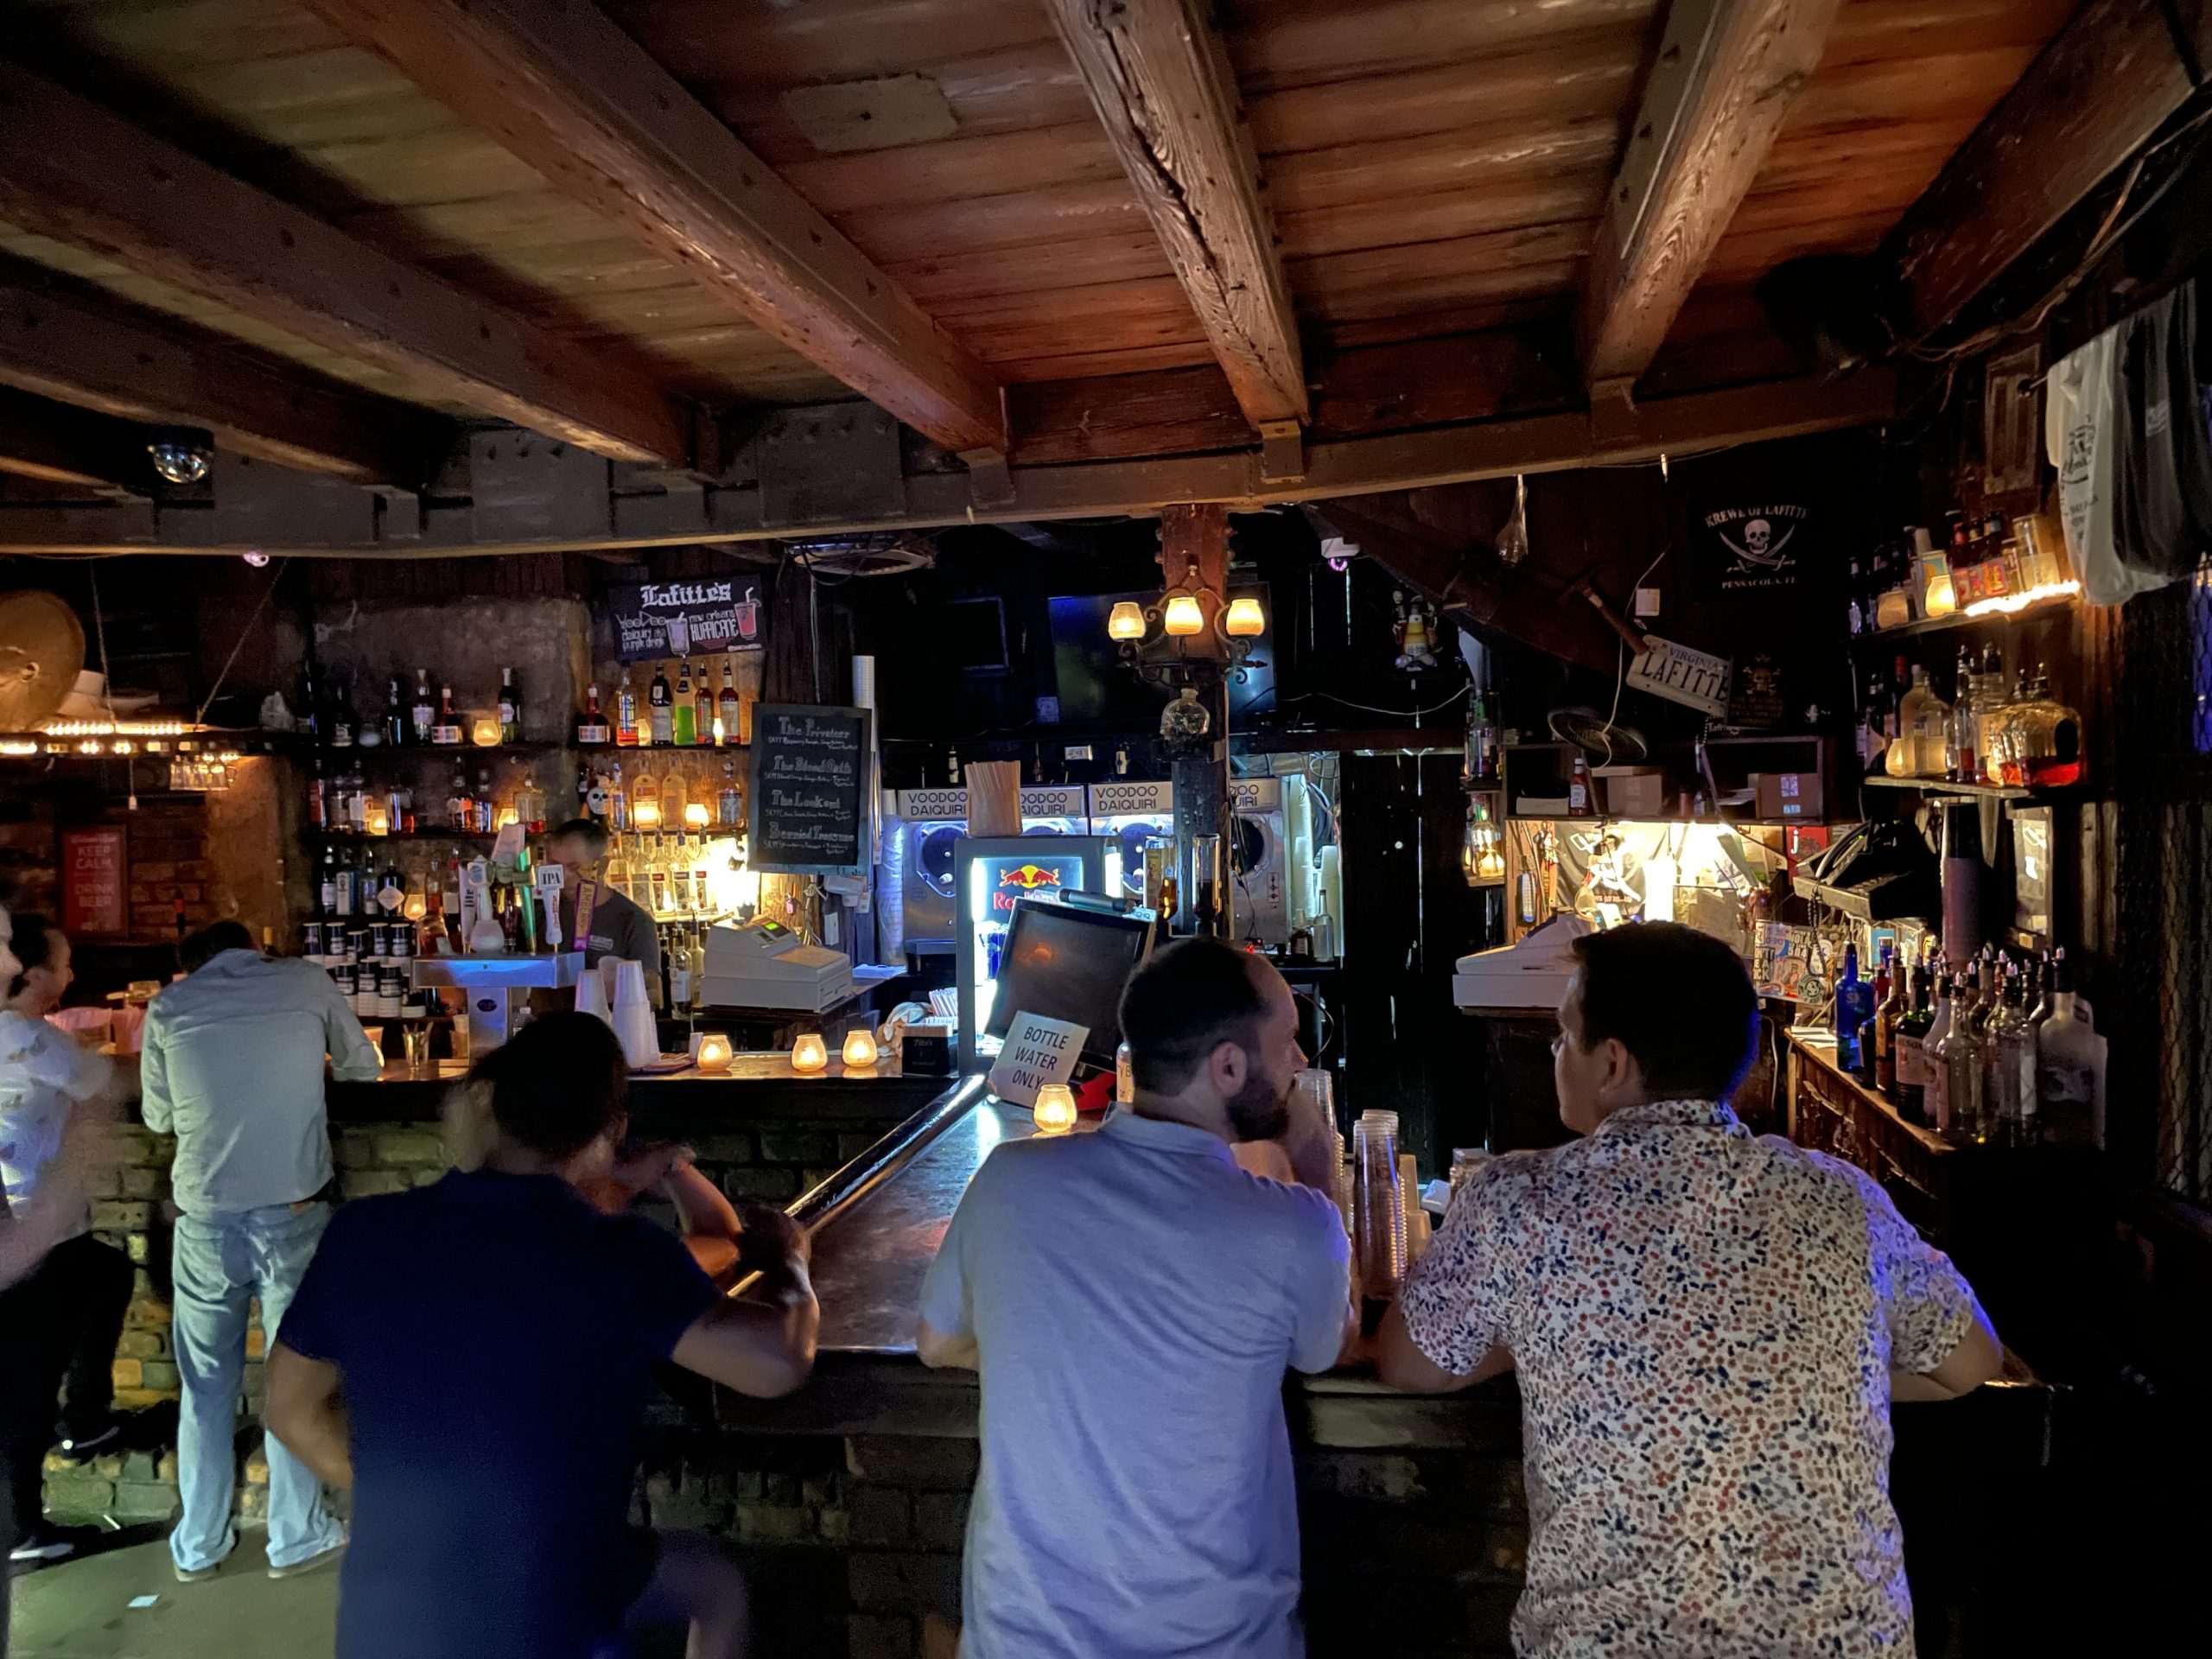 Lafitte's Blacksmith Shop - New Orleans Dive Bar - Bar Area